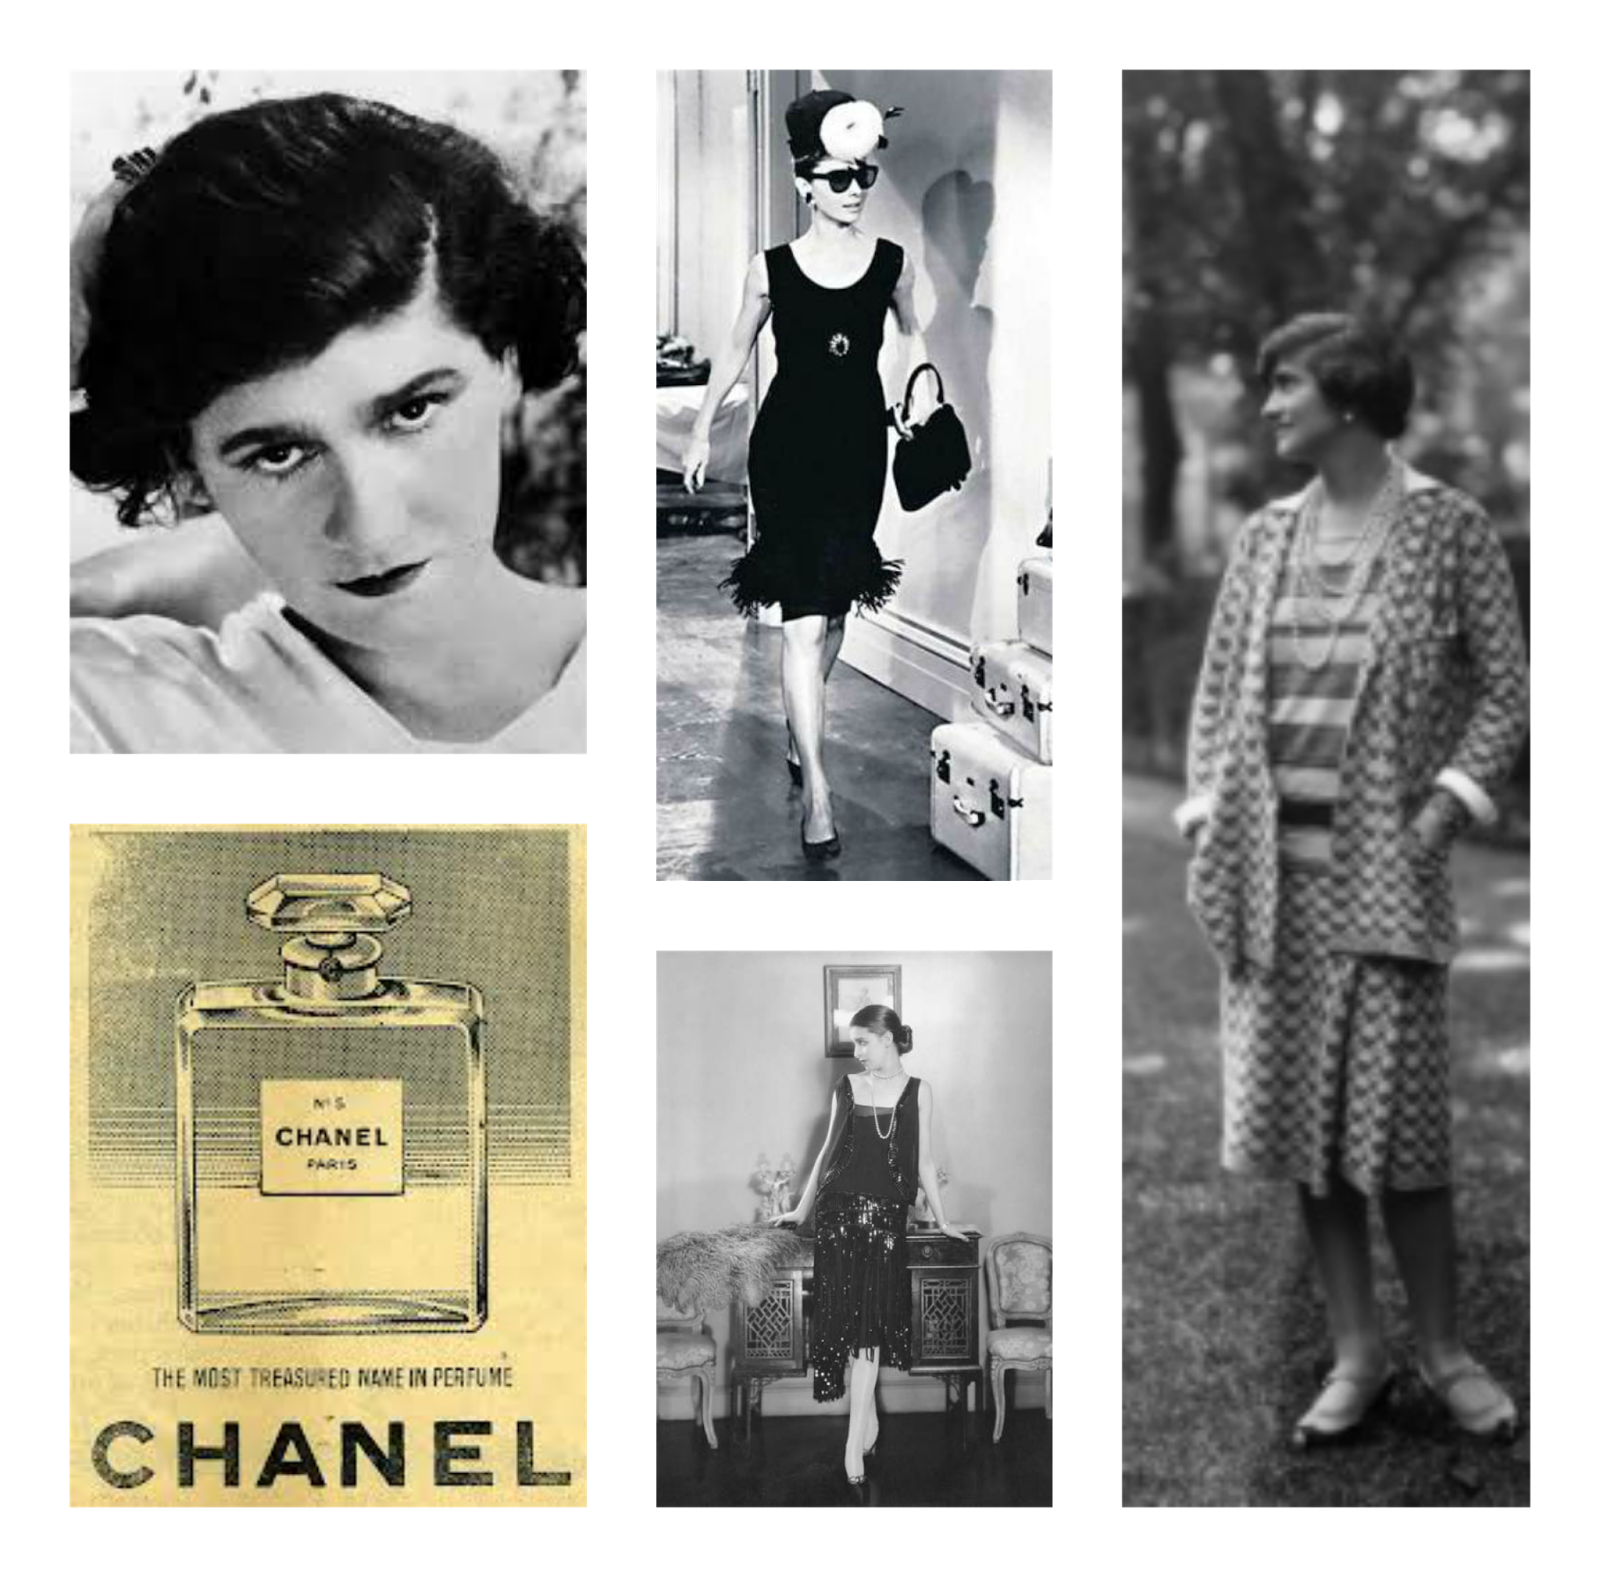 Whistling Woods International- School of Fashion & Design: Iconic 1920's  Fashion Designers